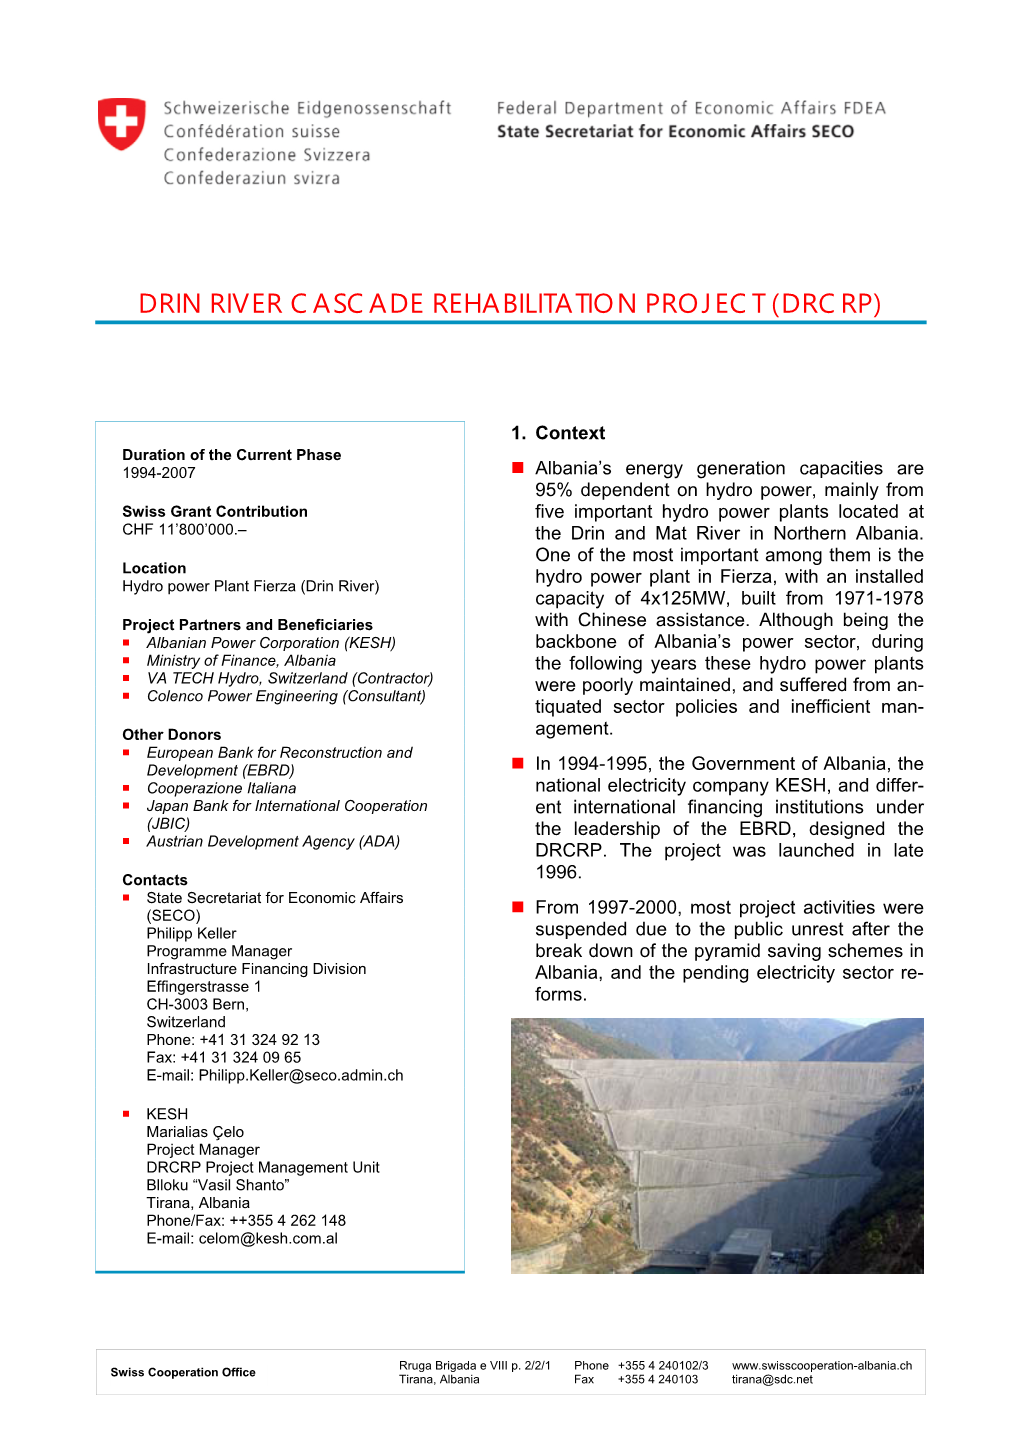 Drin River Cascade Rehabilitation Project (Drcrp)